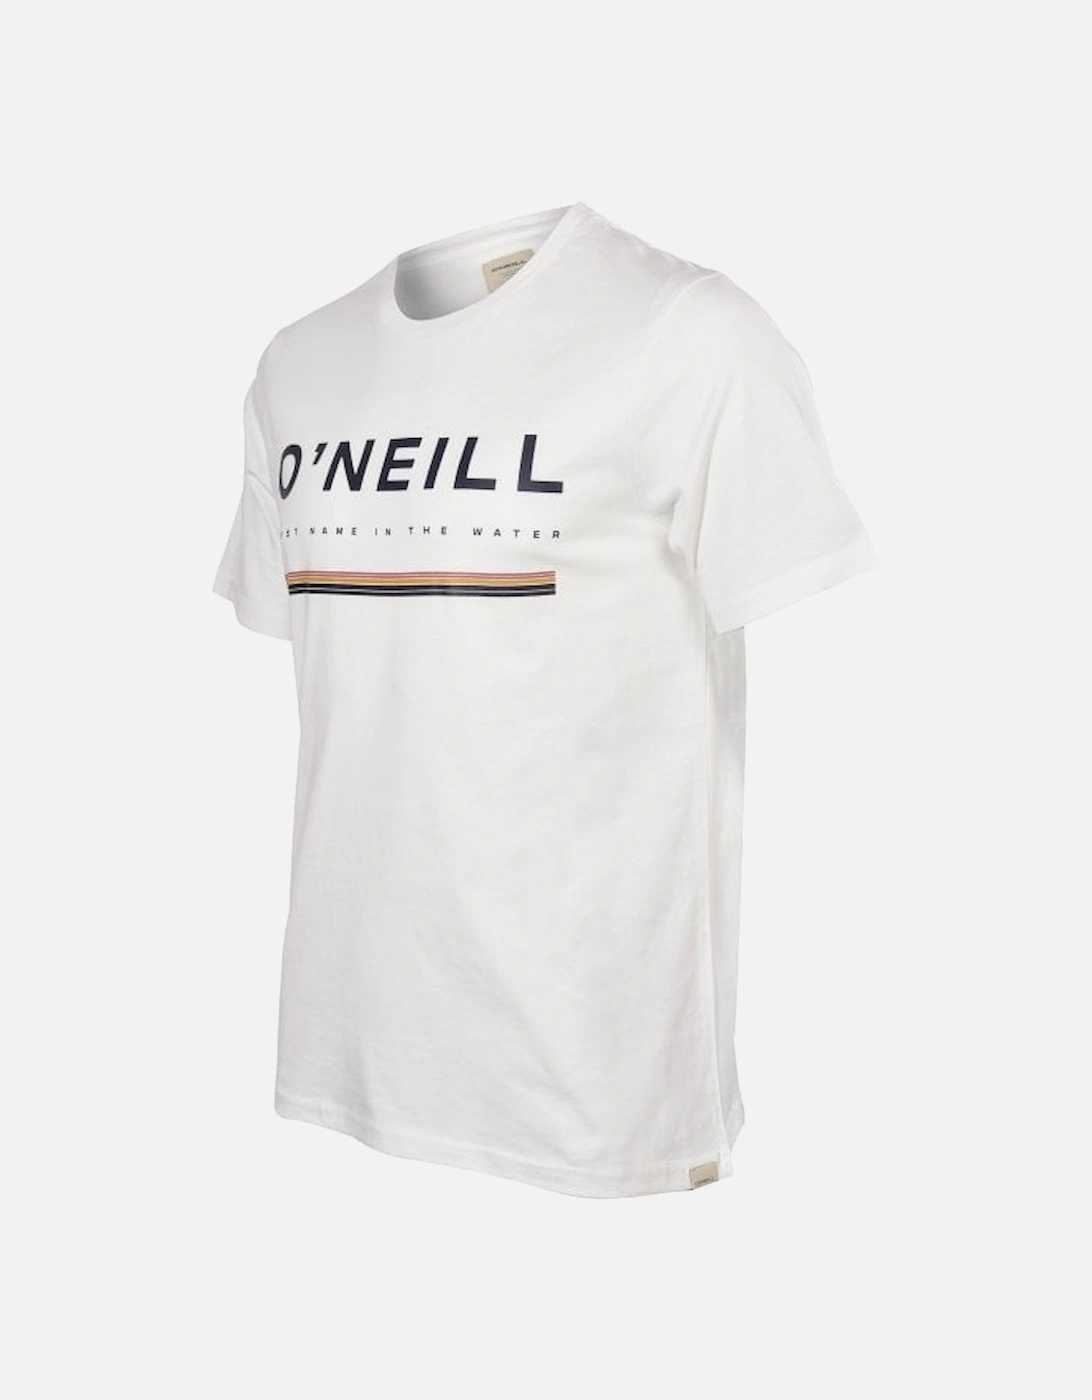 Arrowhead T-Shirt, Powder White